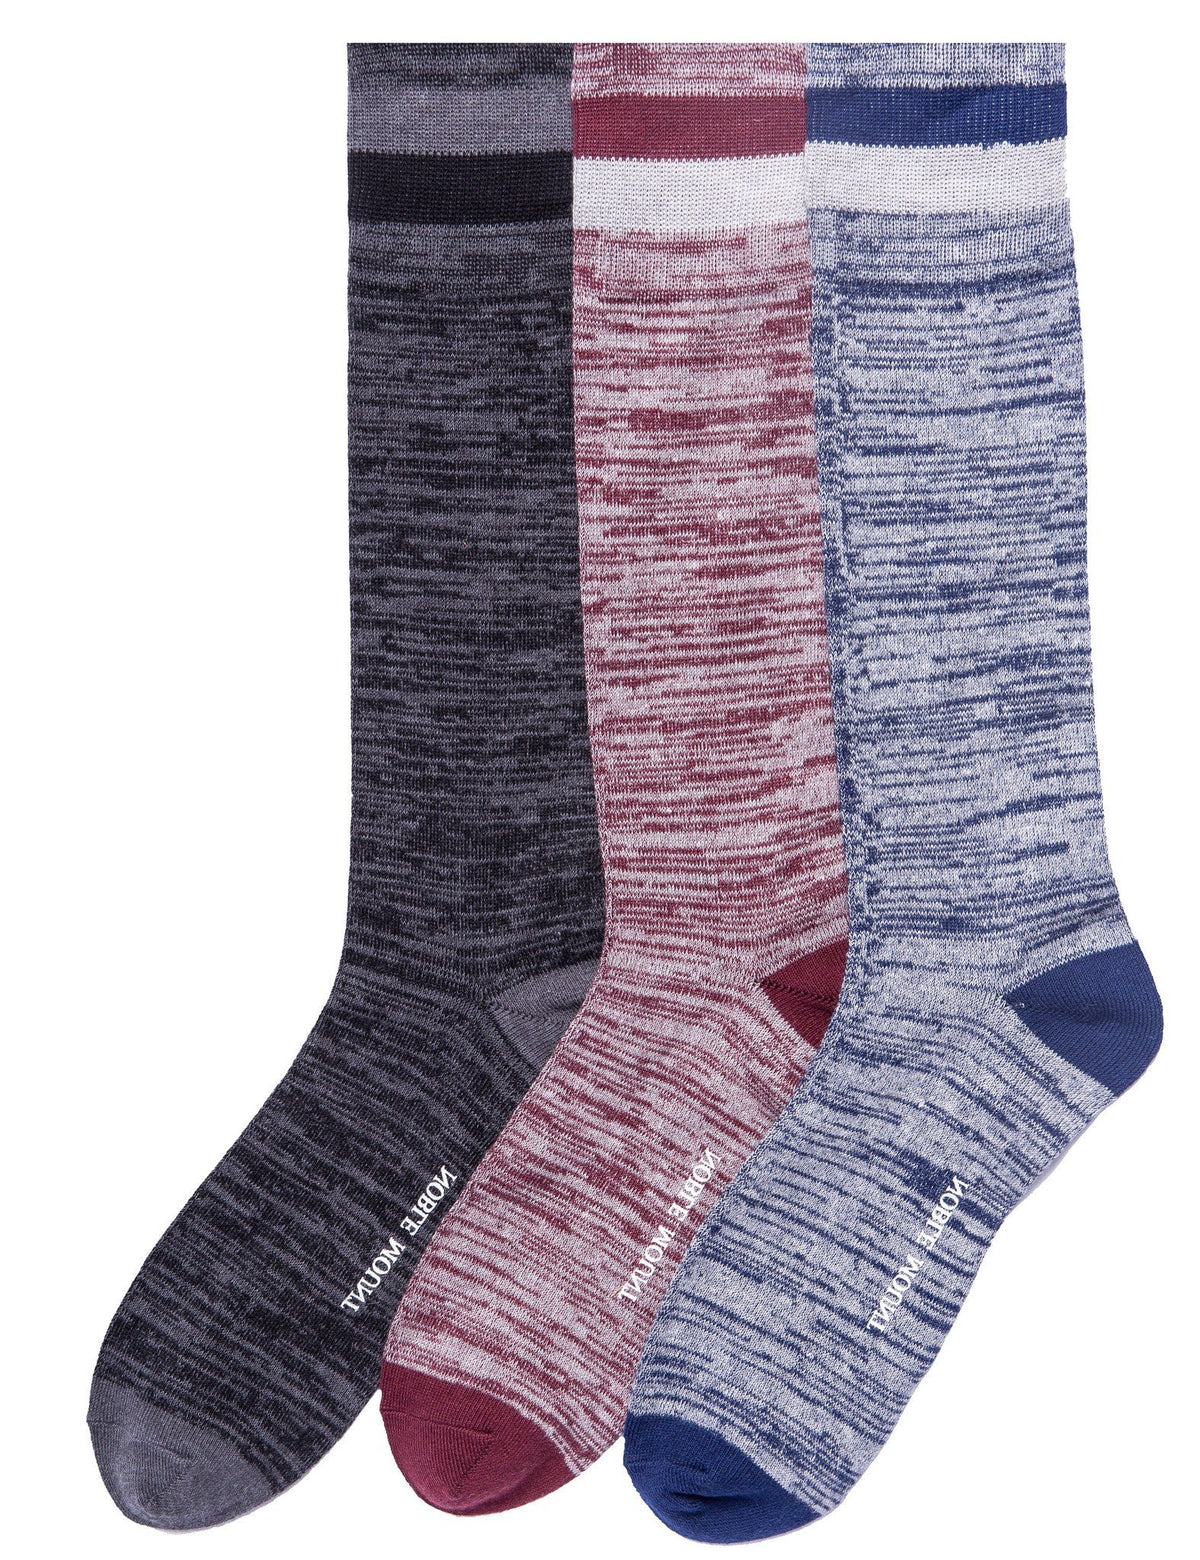 Men's 100% Acrylic Soft Marled Dress Socks 3-Pack - Set A6